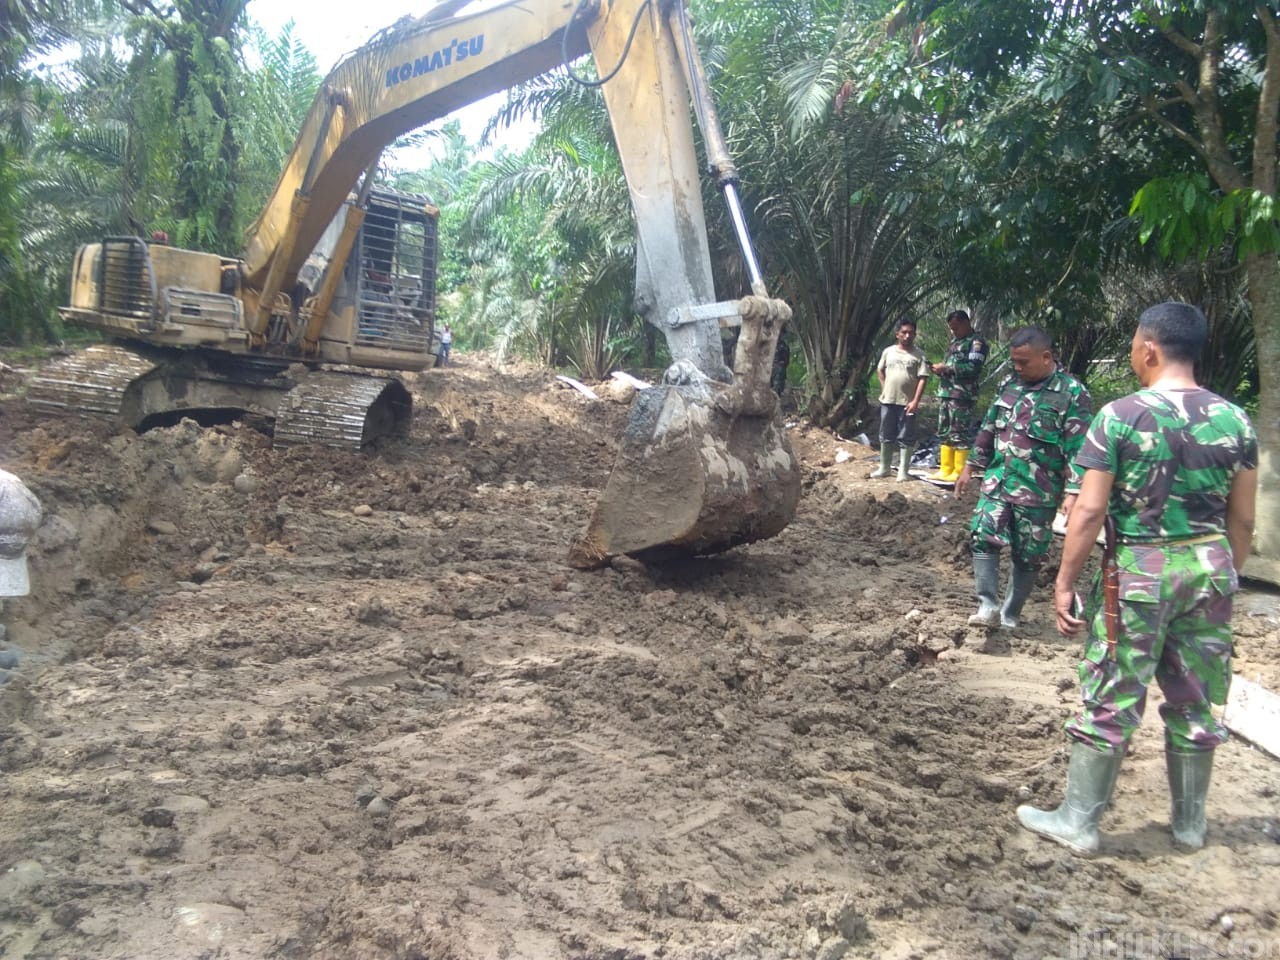 Atasi Lumpur di Badan Jalan, Bakhoe Excavator Percepat Pengerjaan Jalan Rigid Beton